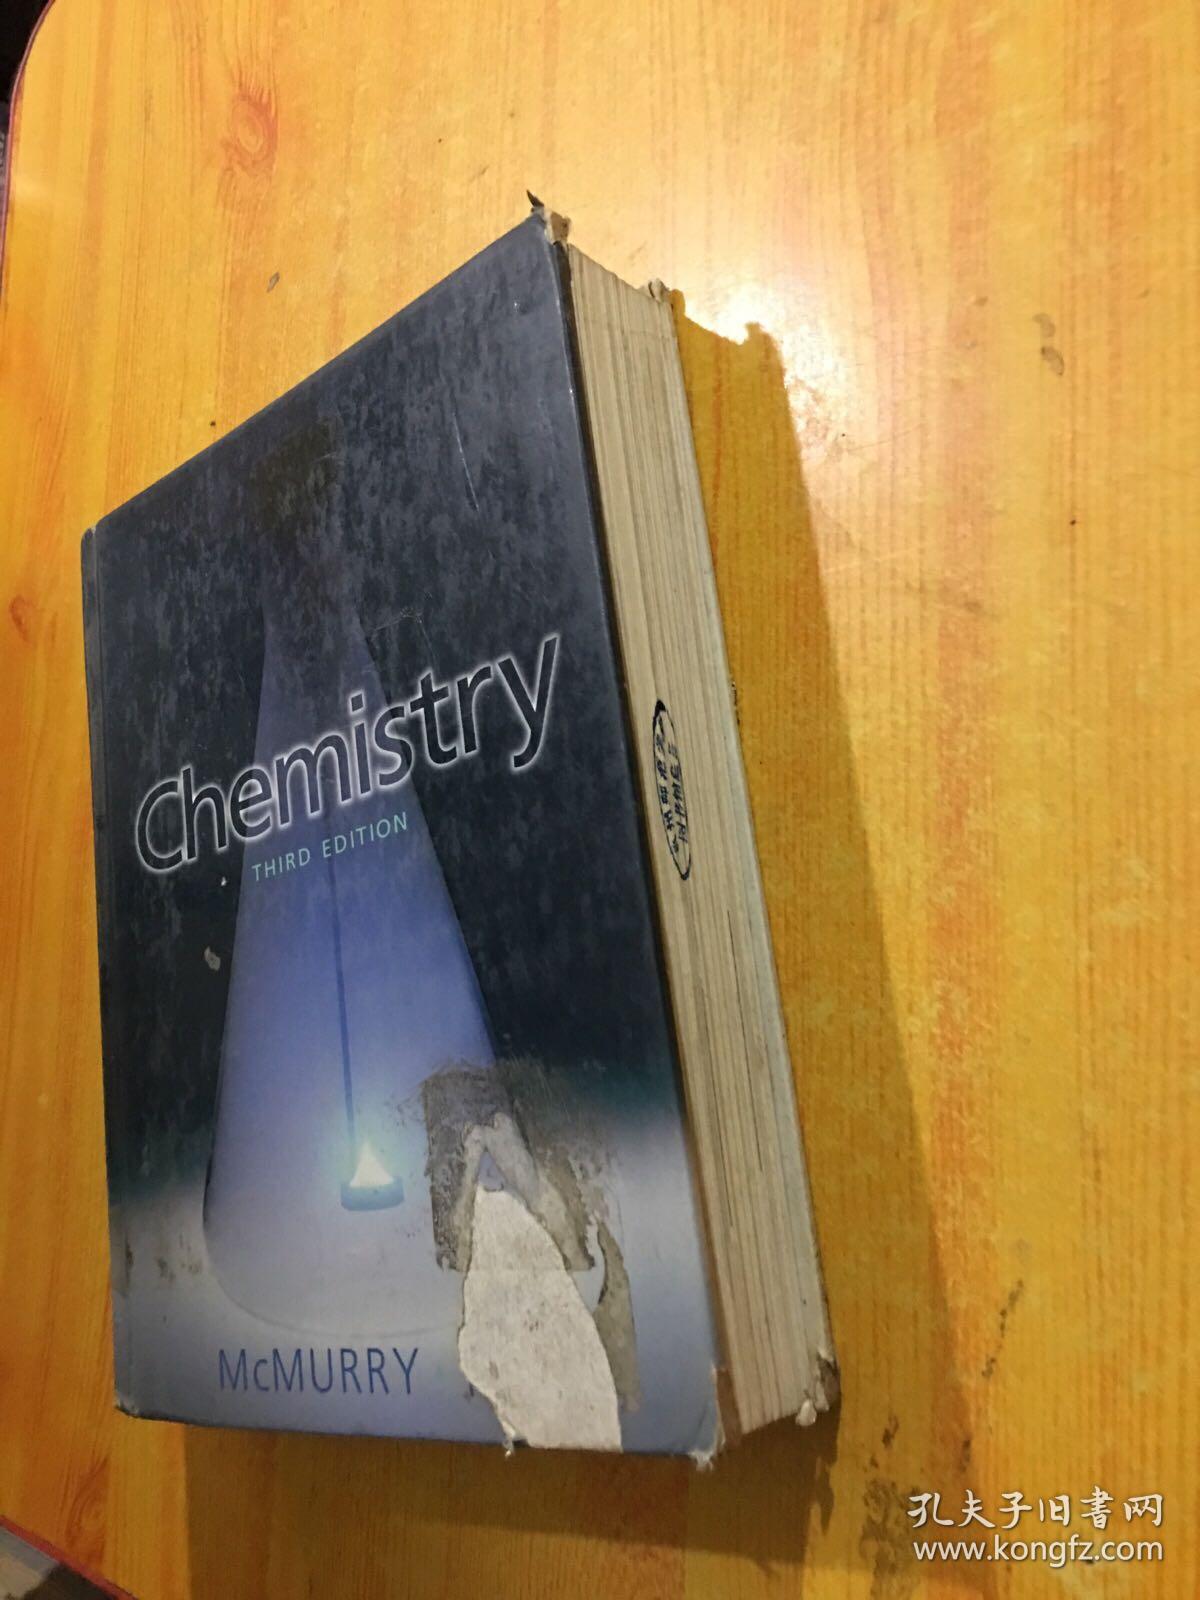 chemistry third edition 英文原版16开